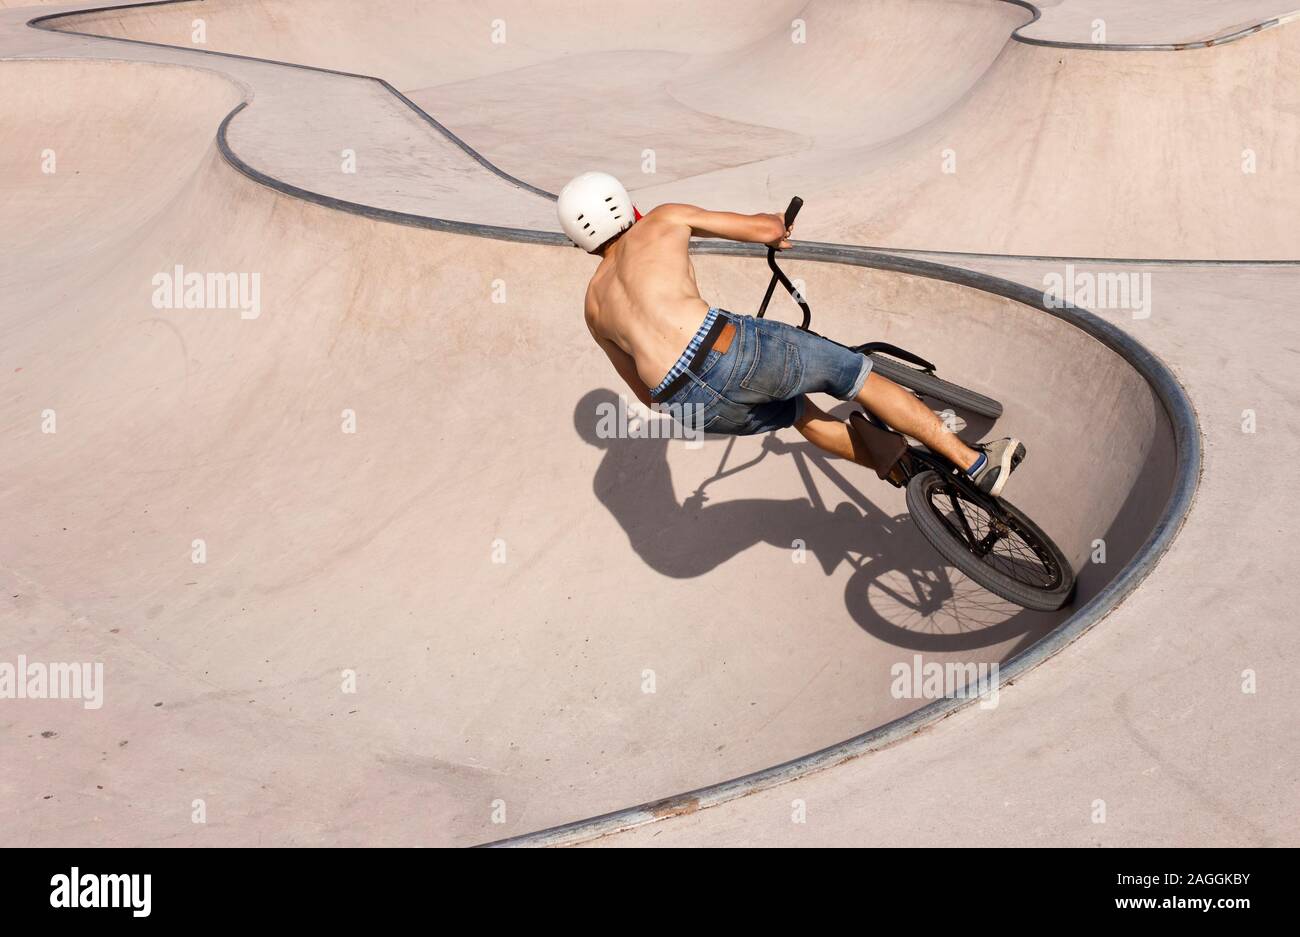 BMX rider boy in a skate-park riding bike Stock Photo